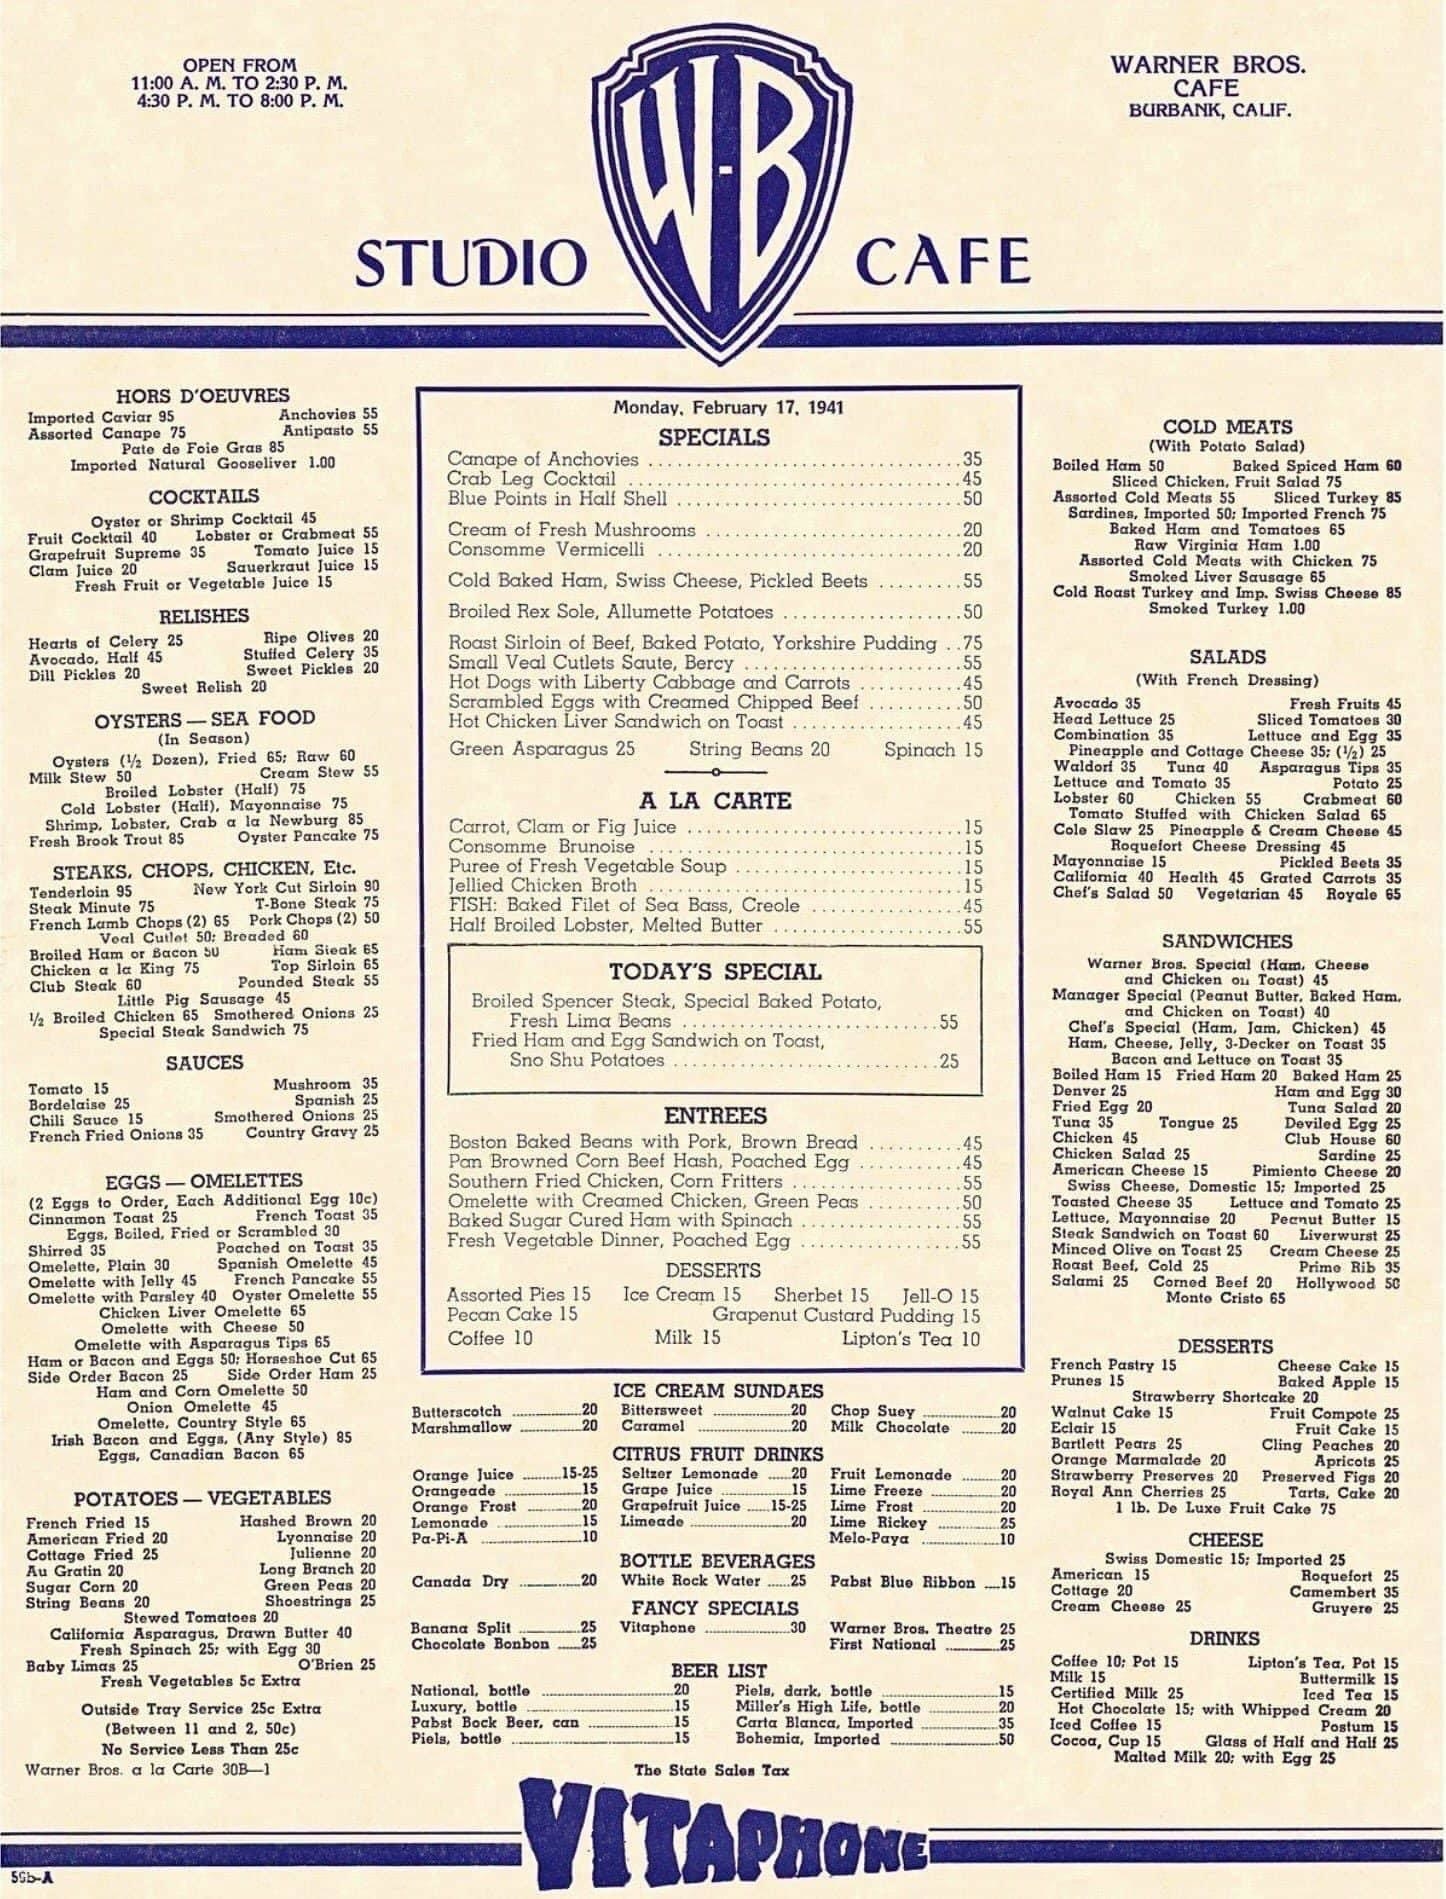 Warner Bros. Studio Cafe menu